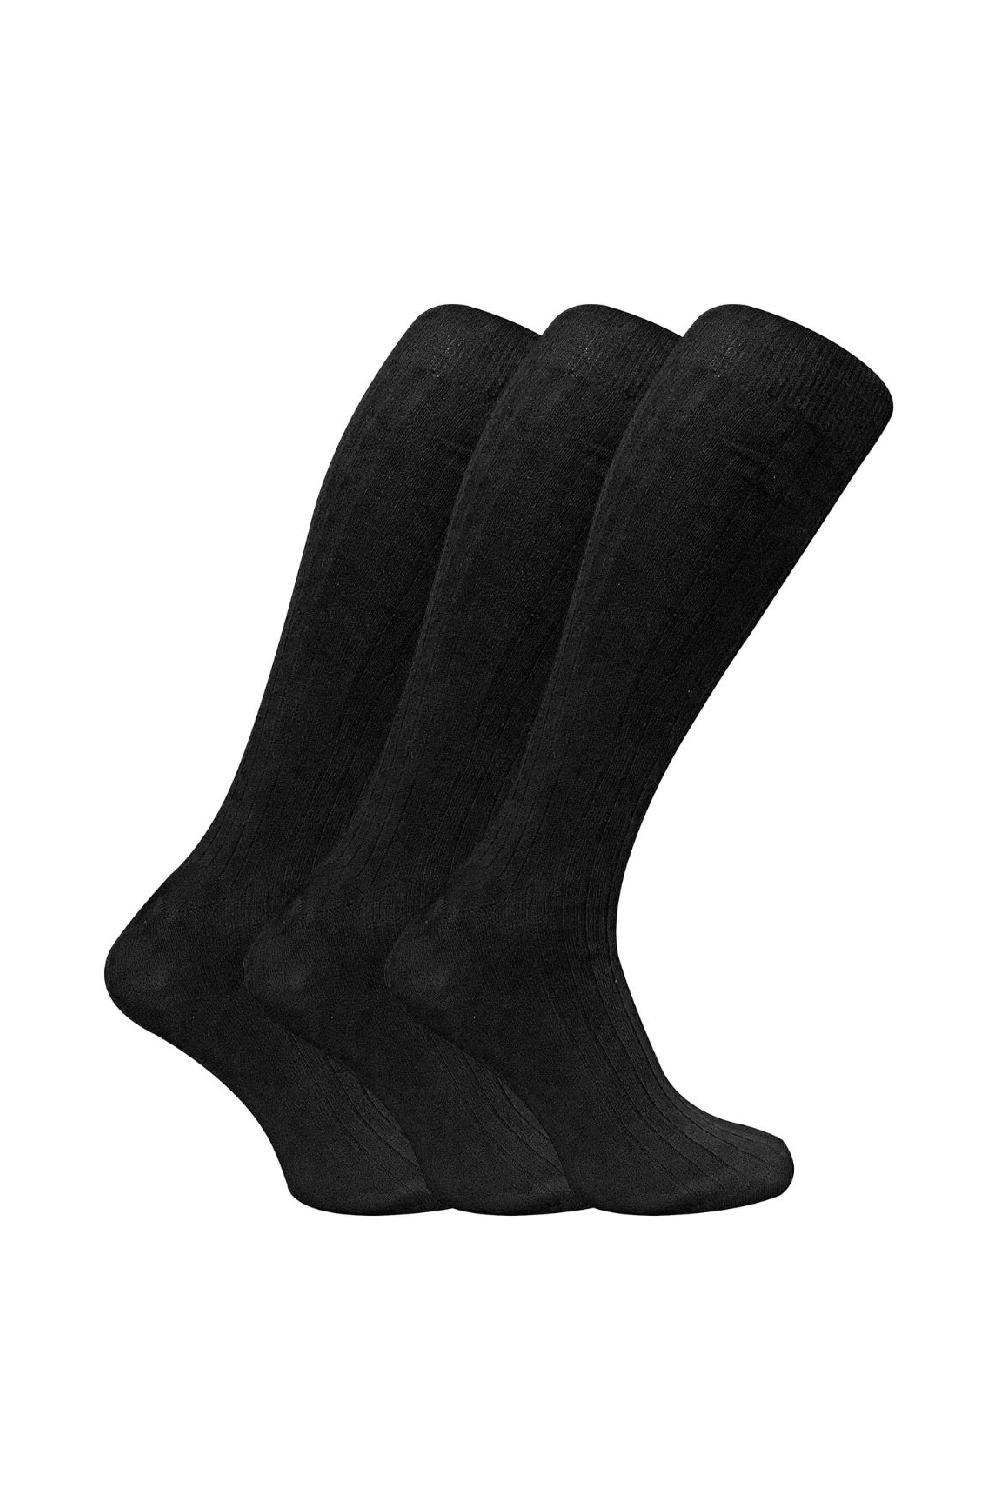 3 Pairs 100% Cotton Long Soft Knee High Socks